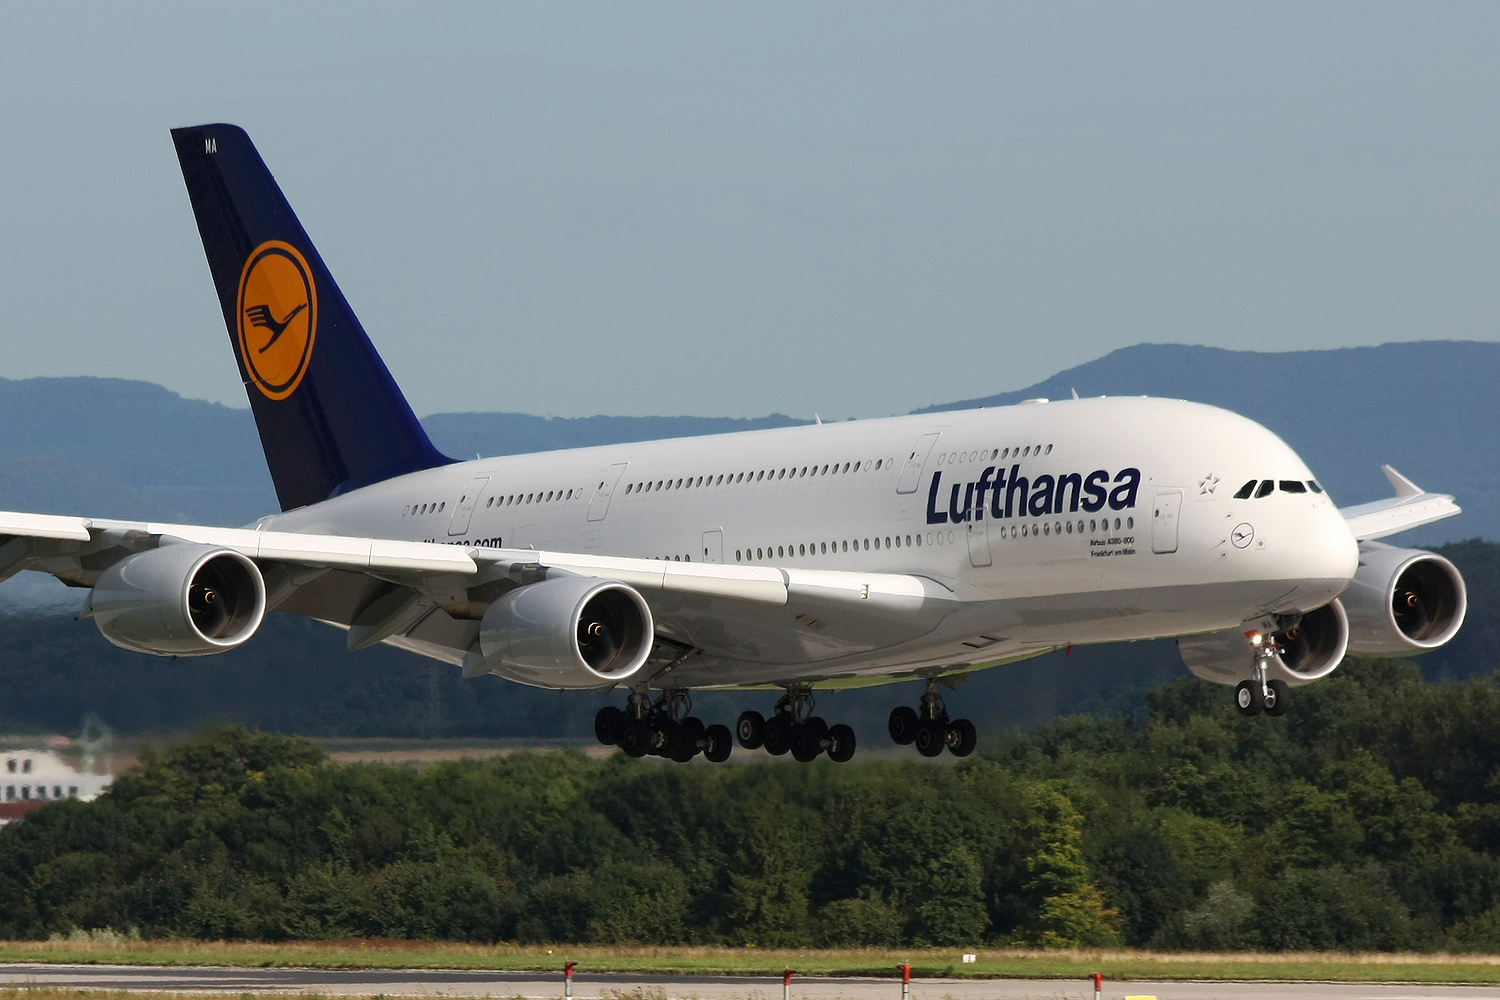 Lufthansa Offering Tampa Flights to Frankfurt in 2015